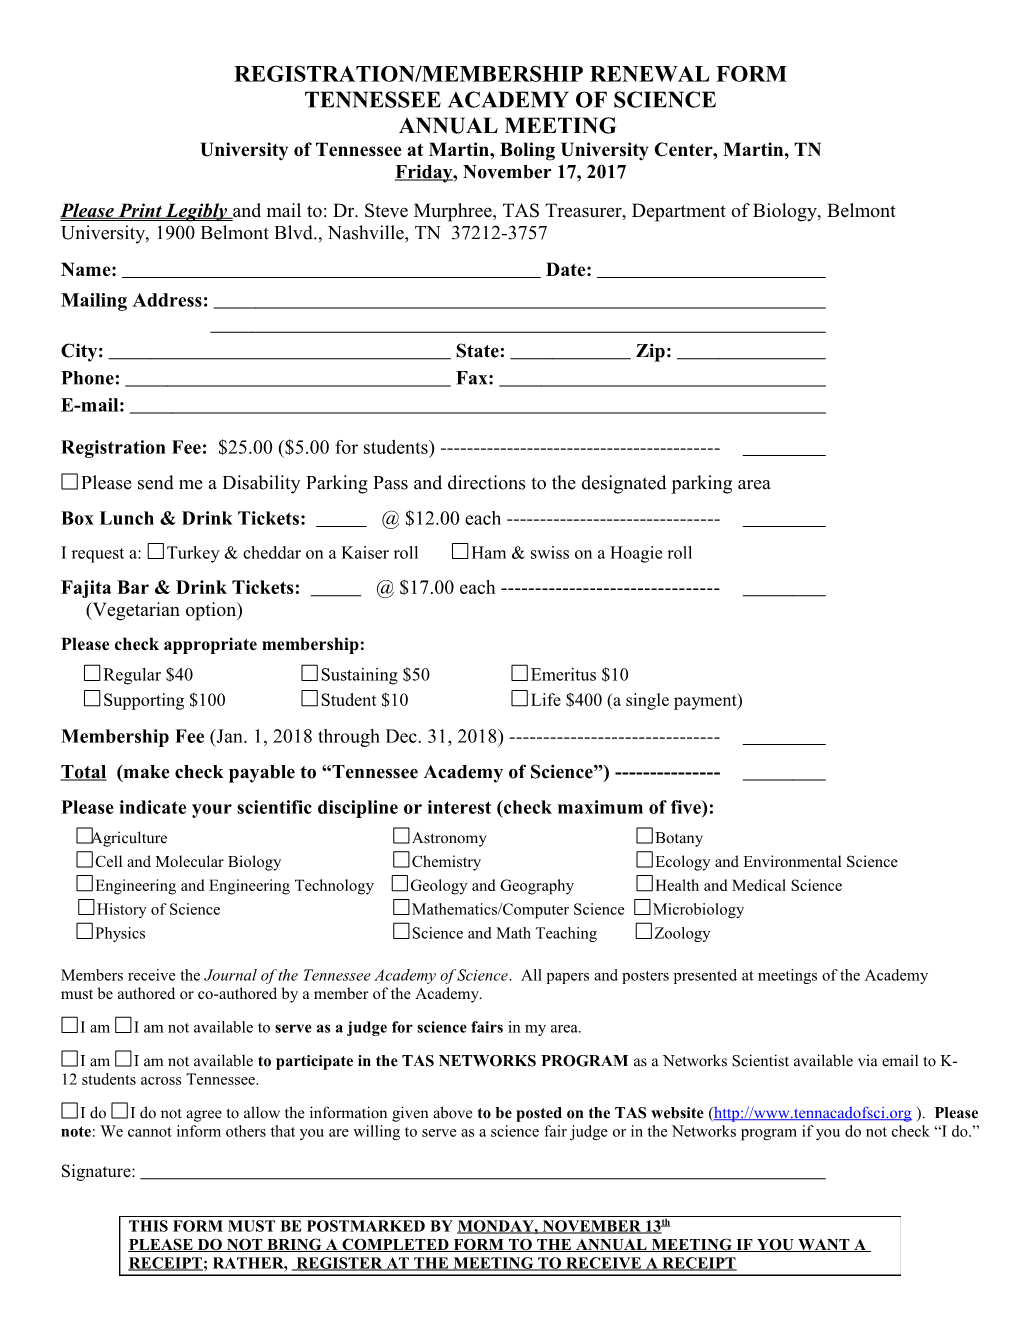 TAS Membership Form (99)